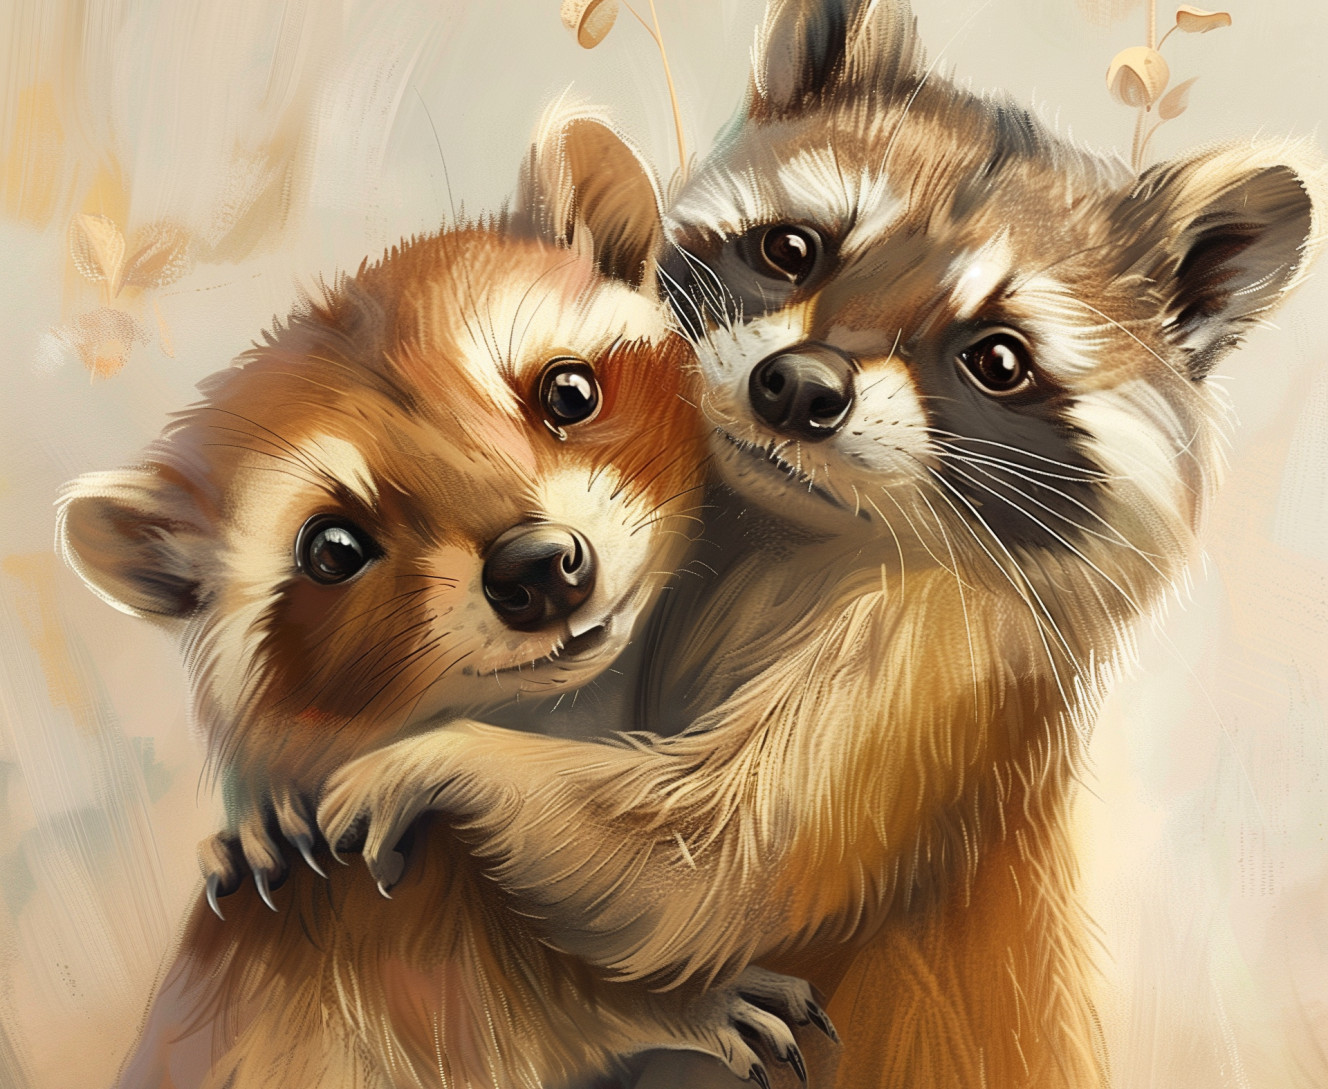 Friendly raccoons